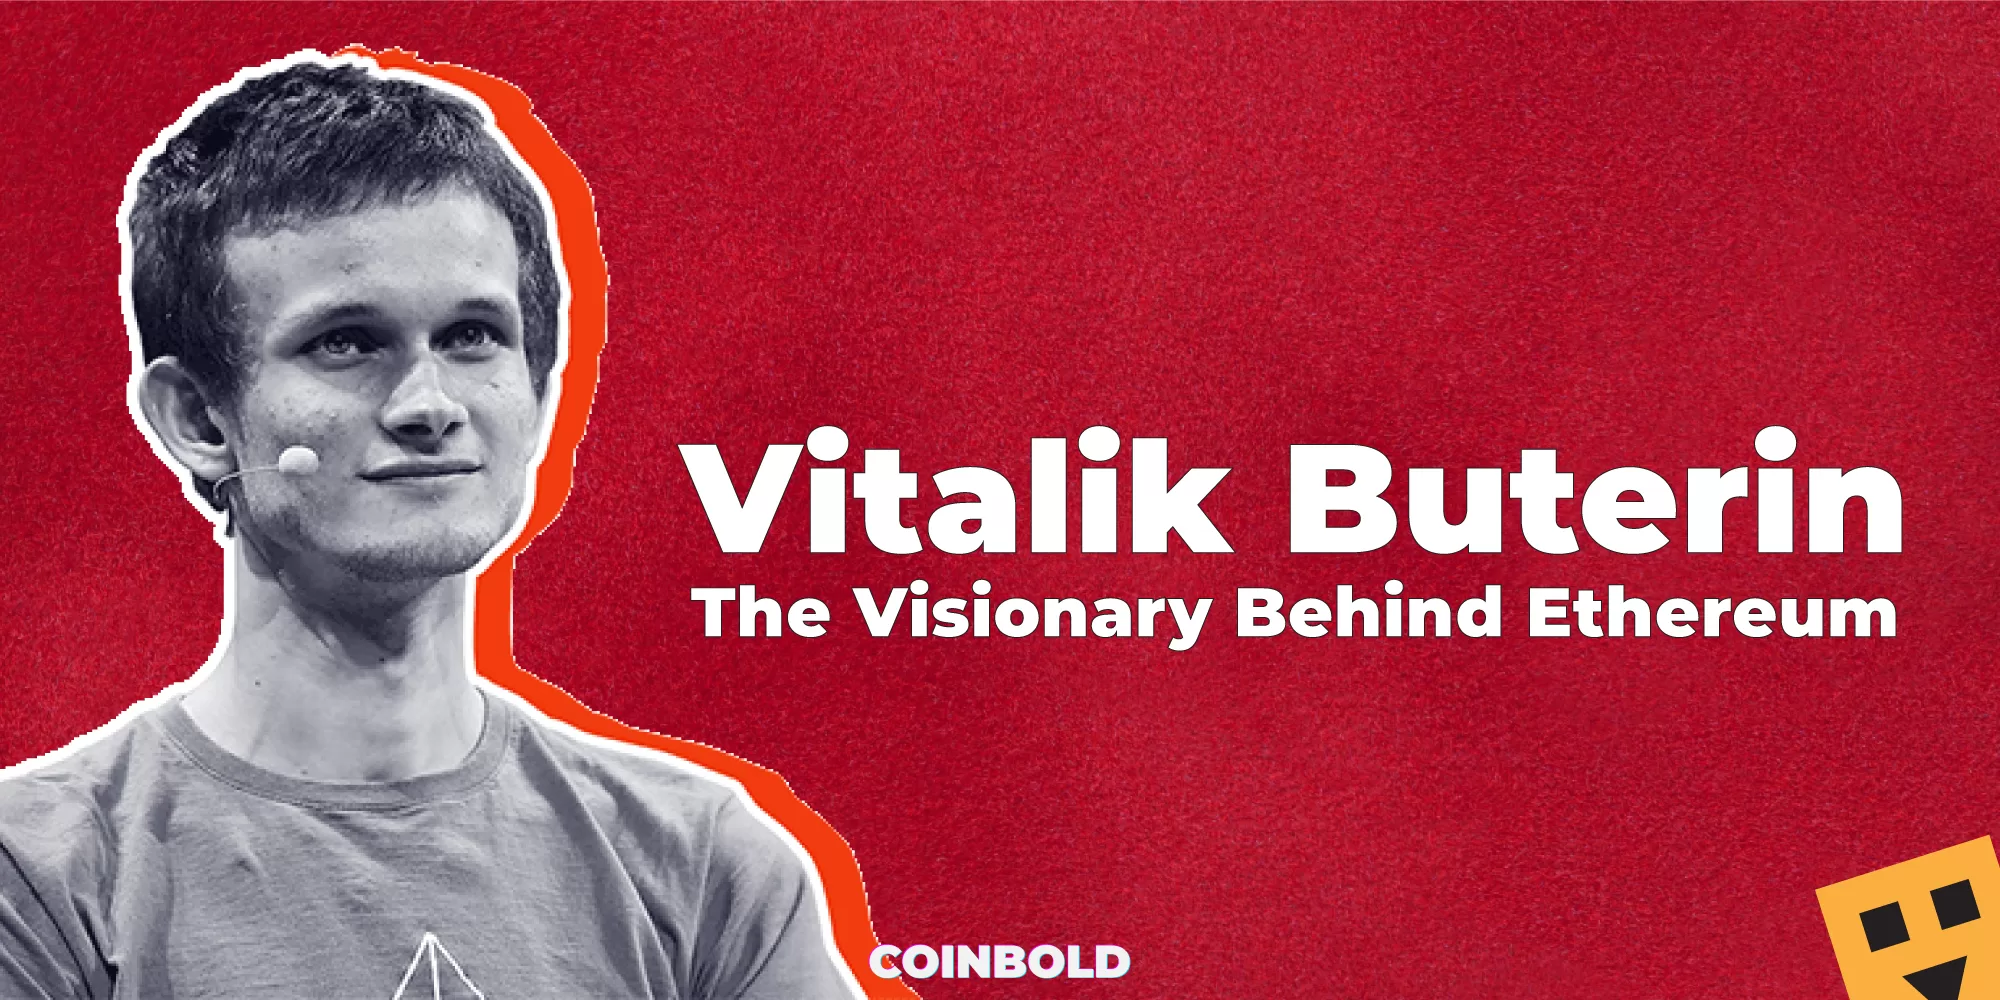 Vitalik Buterin: The Visionary Behind Ethereum